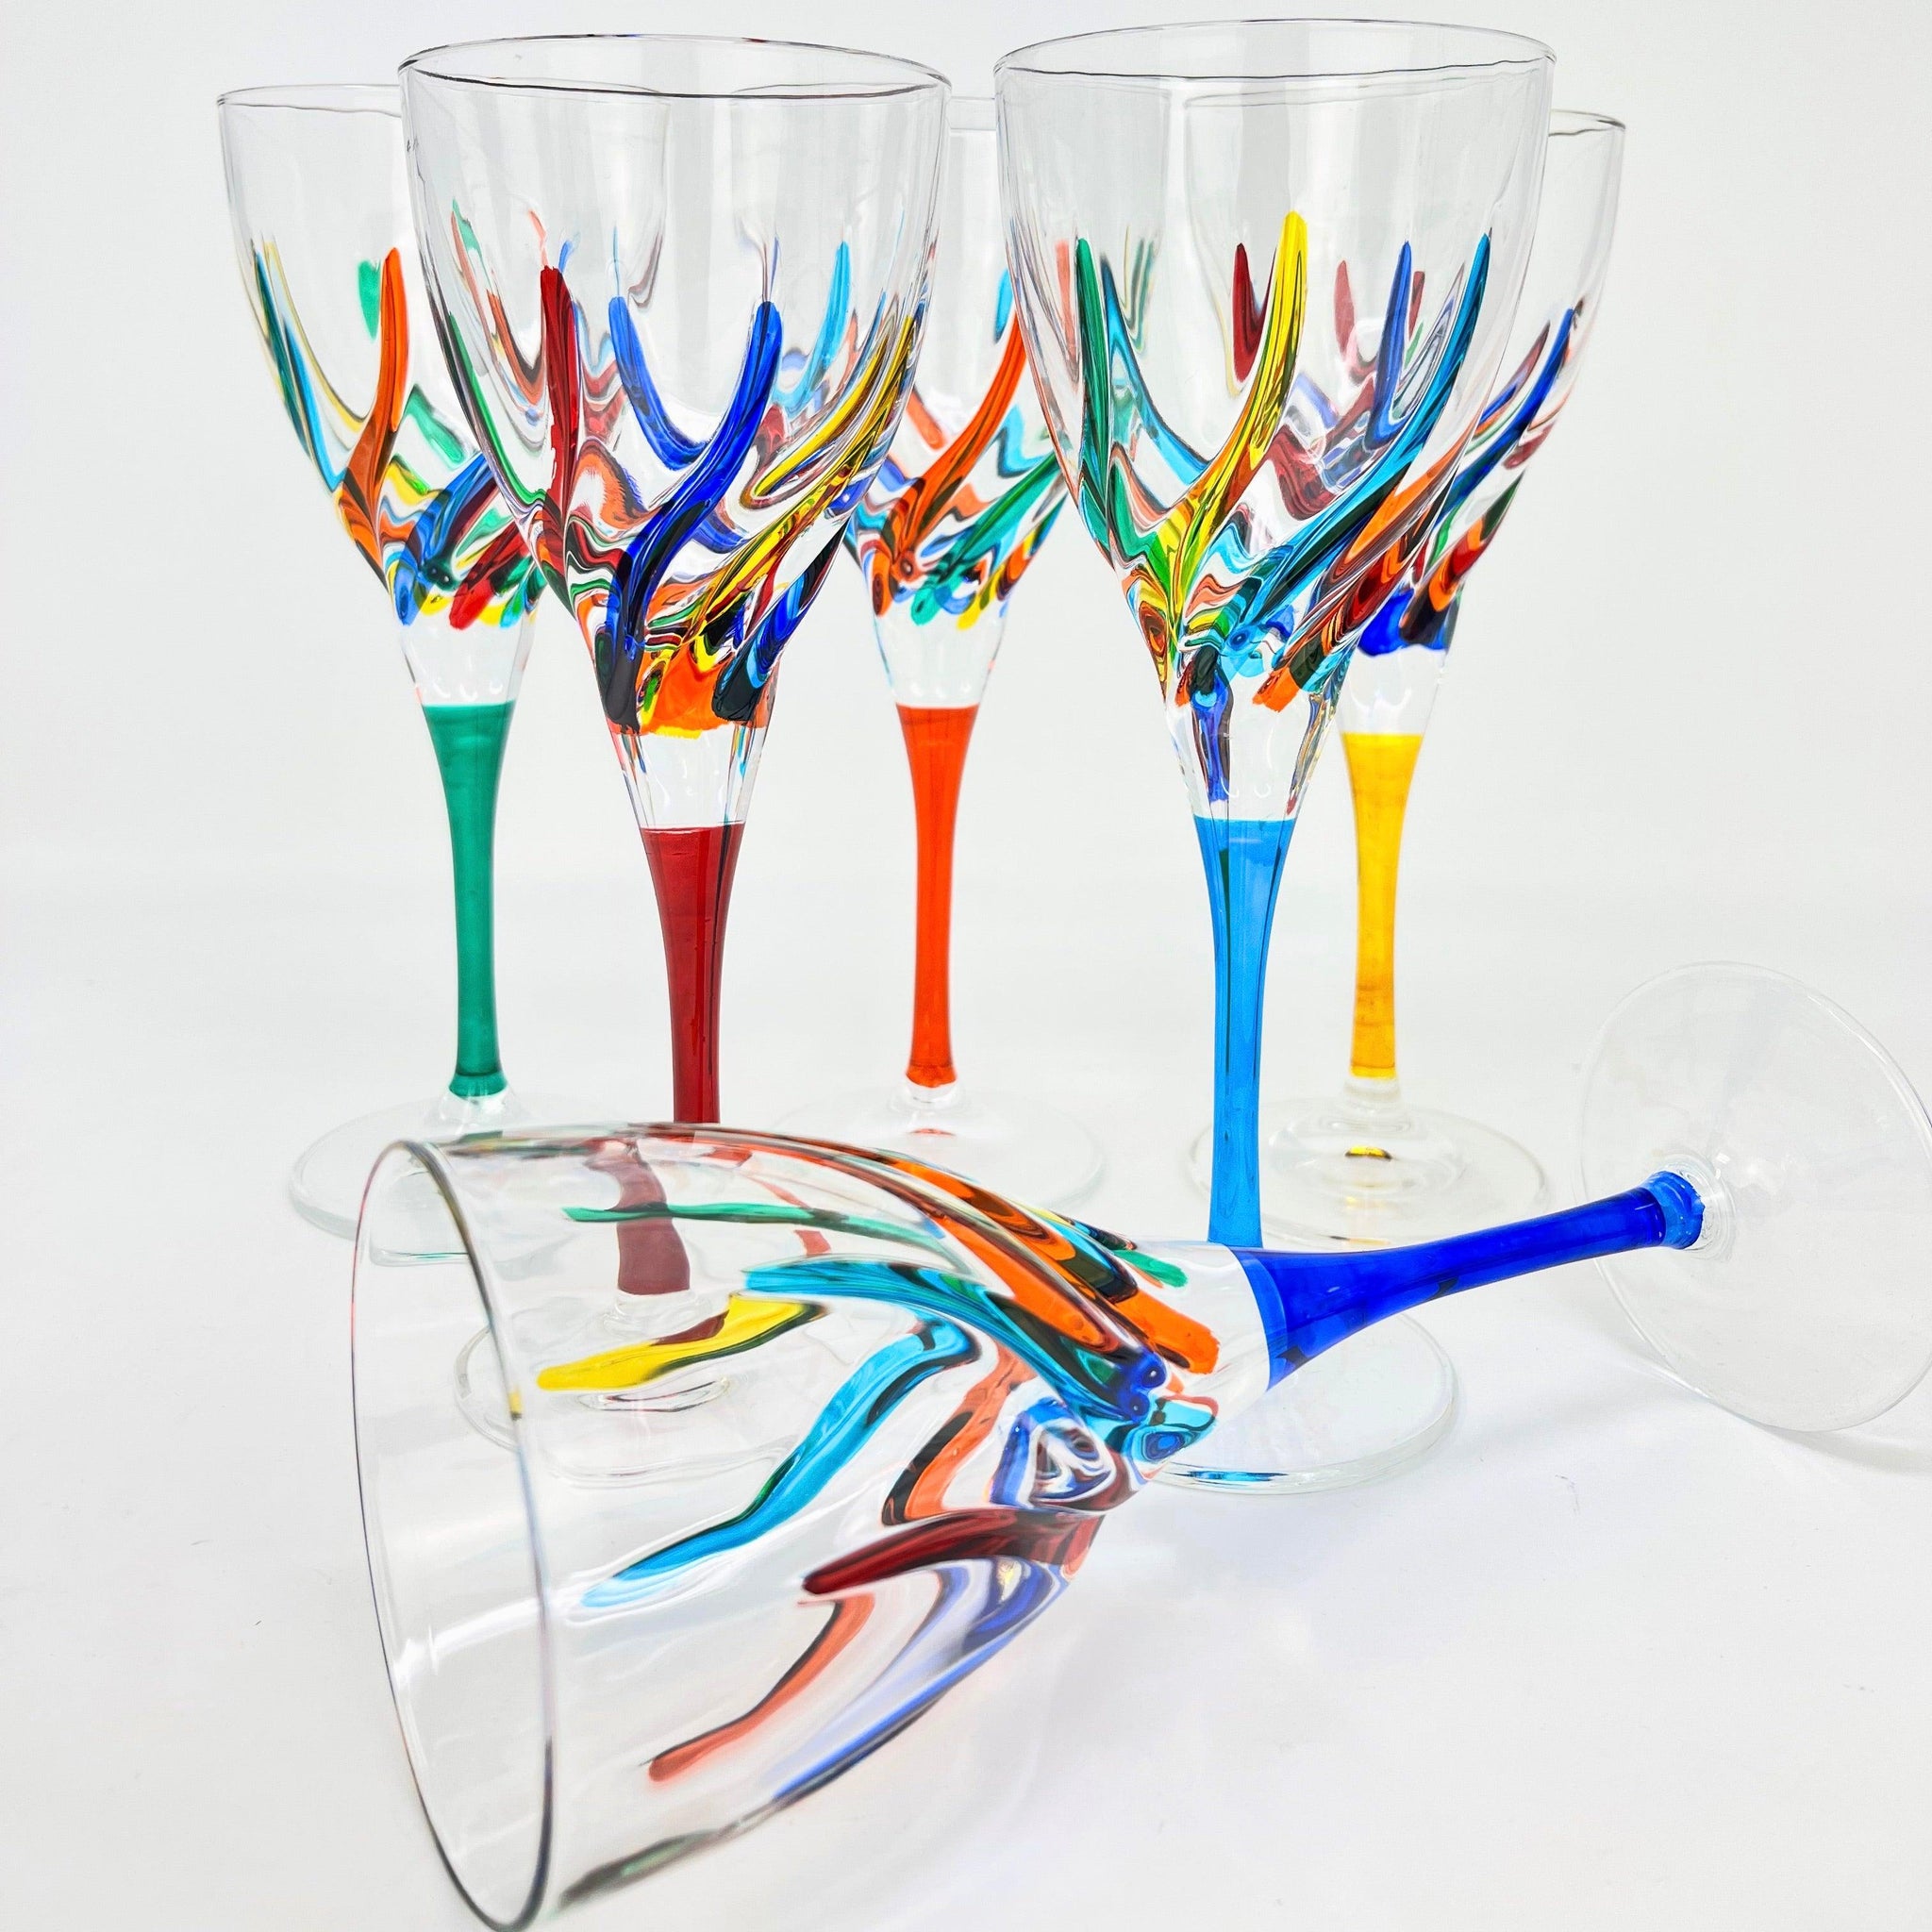 Trix Collection Peacock Wine Glass (Italian Glass) - Luxurious Interiors